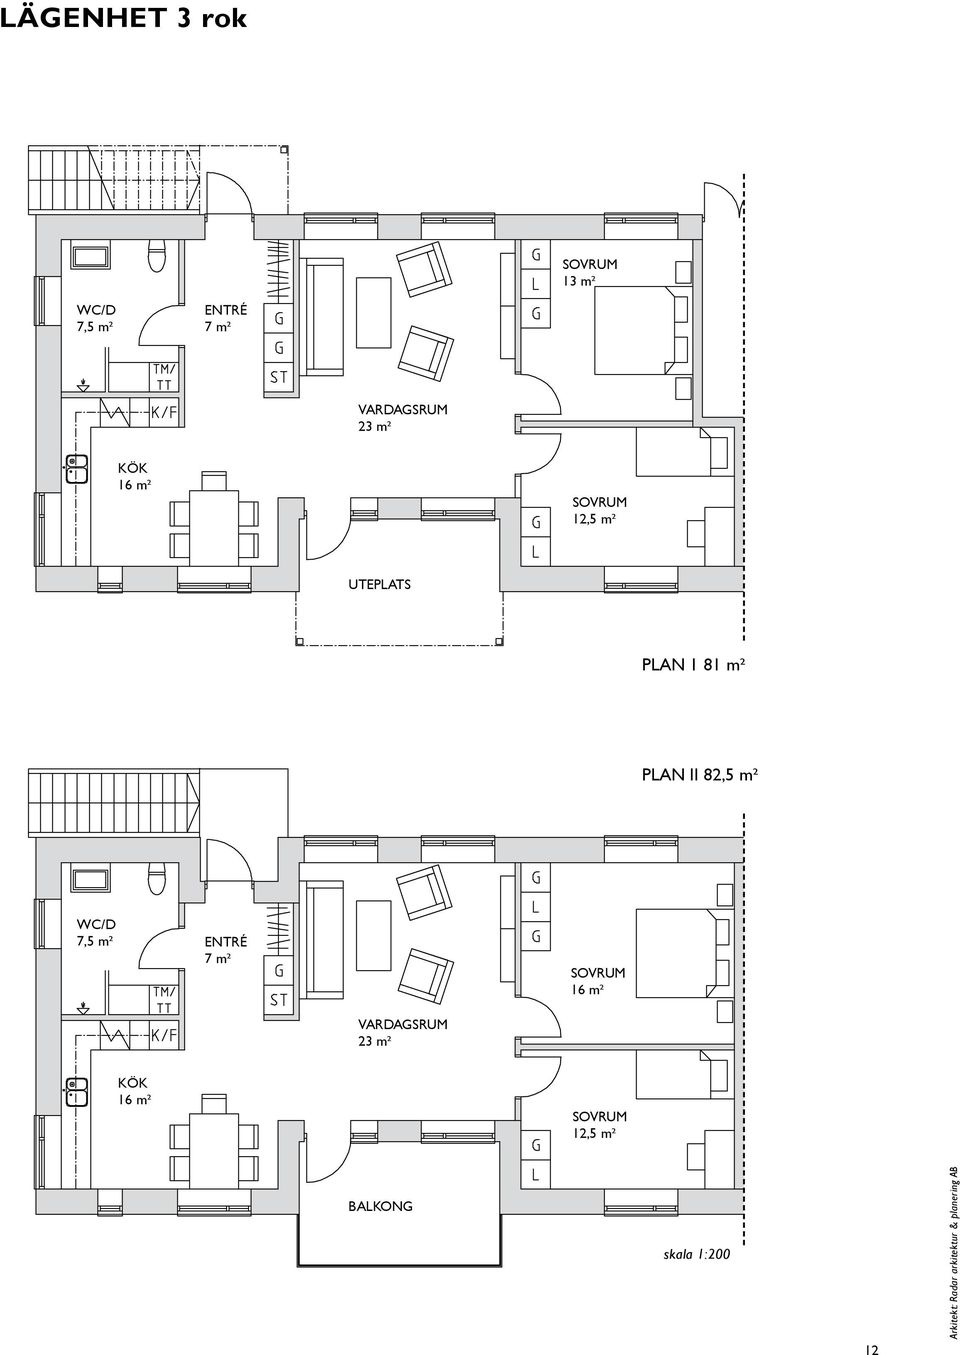 7,5 m² ENTRÉ 7 m² 16 m² VARDAGSRUM 23 m² KÖK 16 m² 12,5 m²